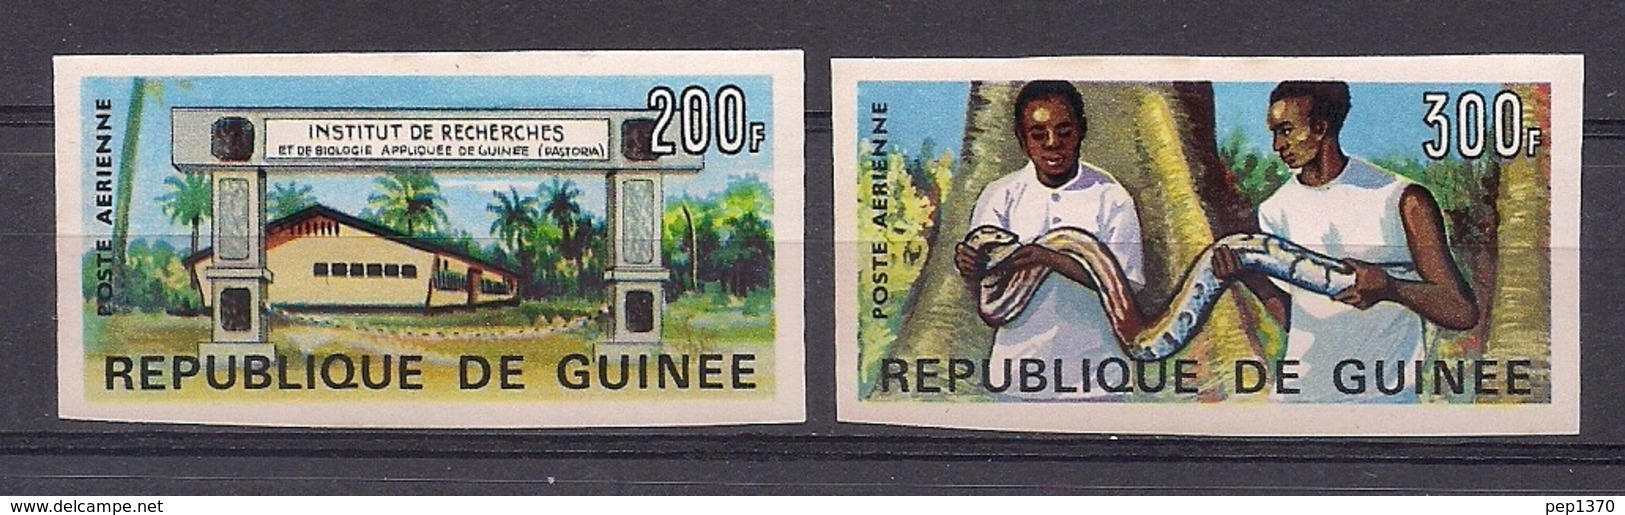 GUINEA 1967 - INSTITUTO DE BIOLOGIA - SERPIENTES - SNAKES - YVERT PA Nº 69/70** SIN DENTAR-NON DENTELE - IMPERFORATED - República De Guinea (1958-...)